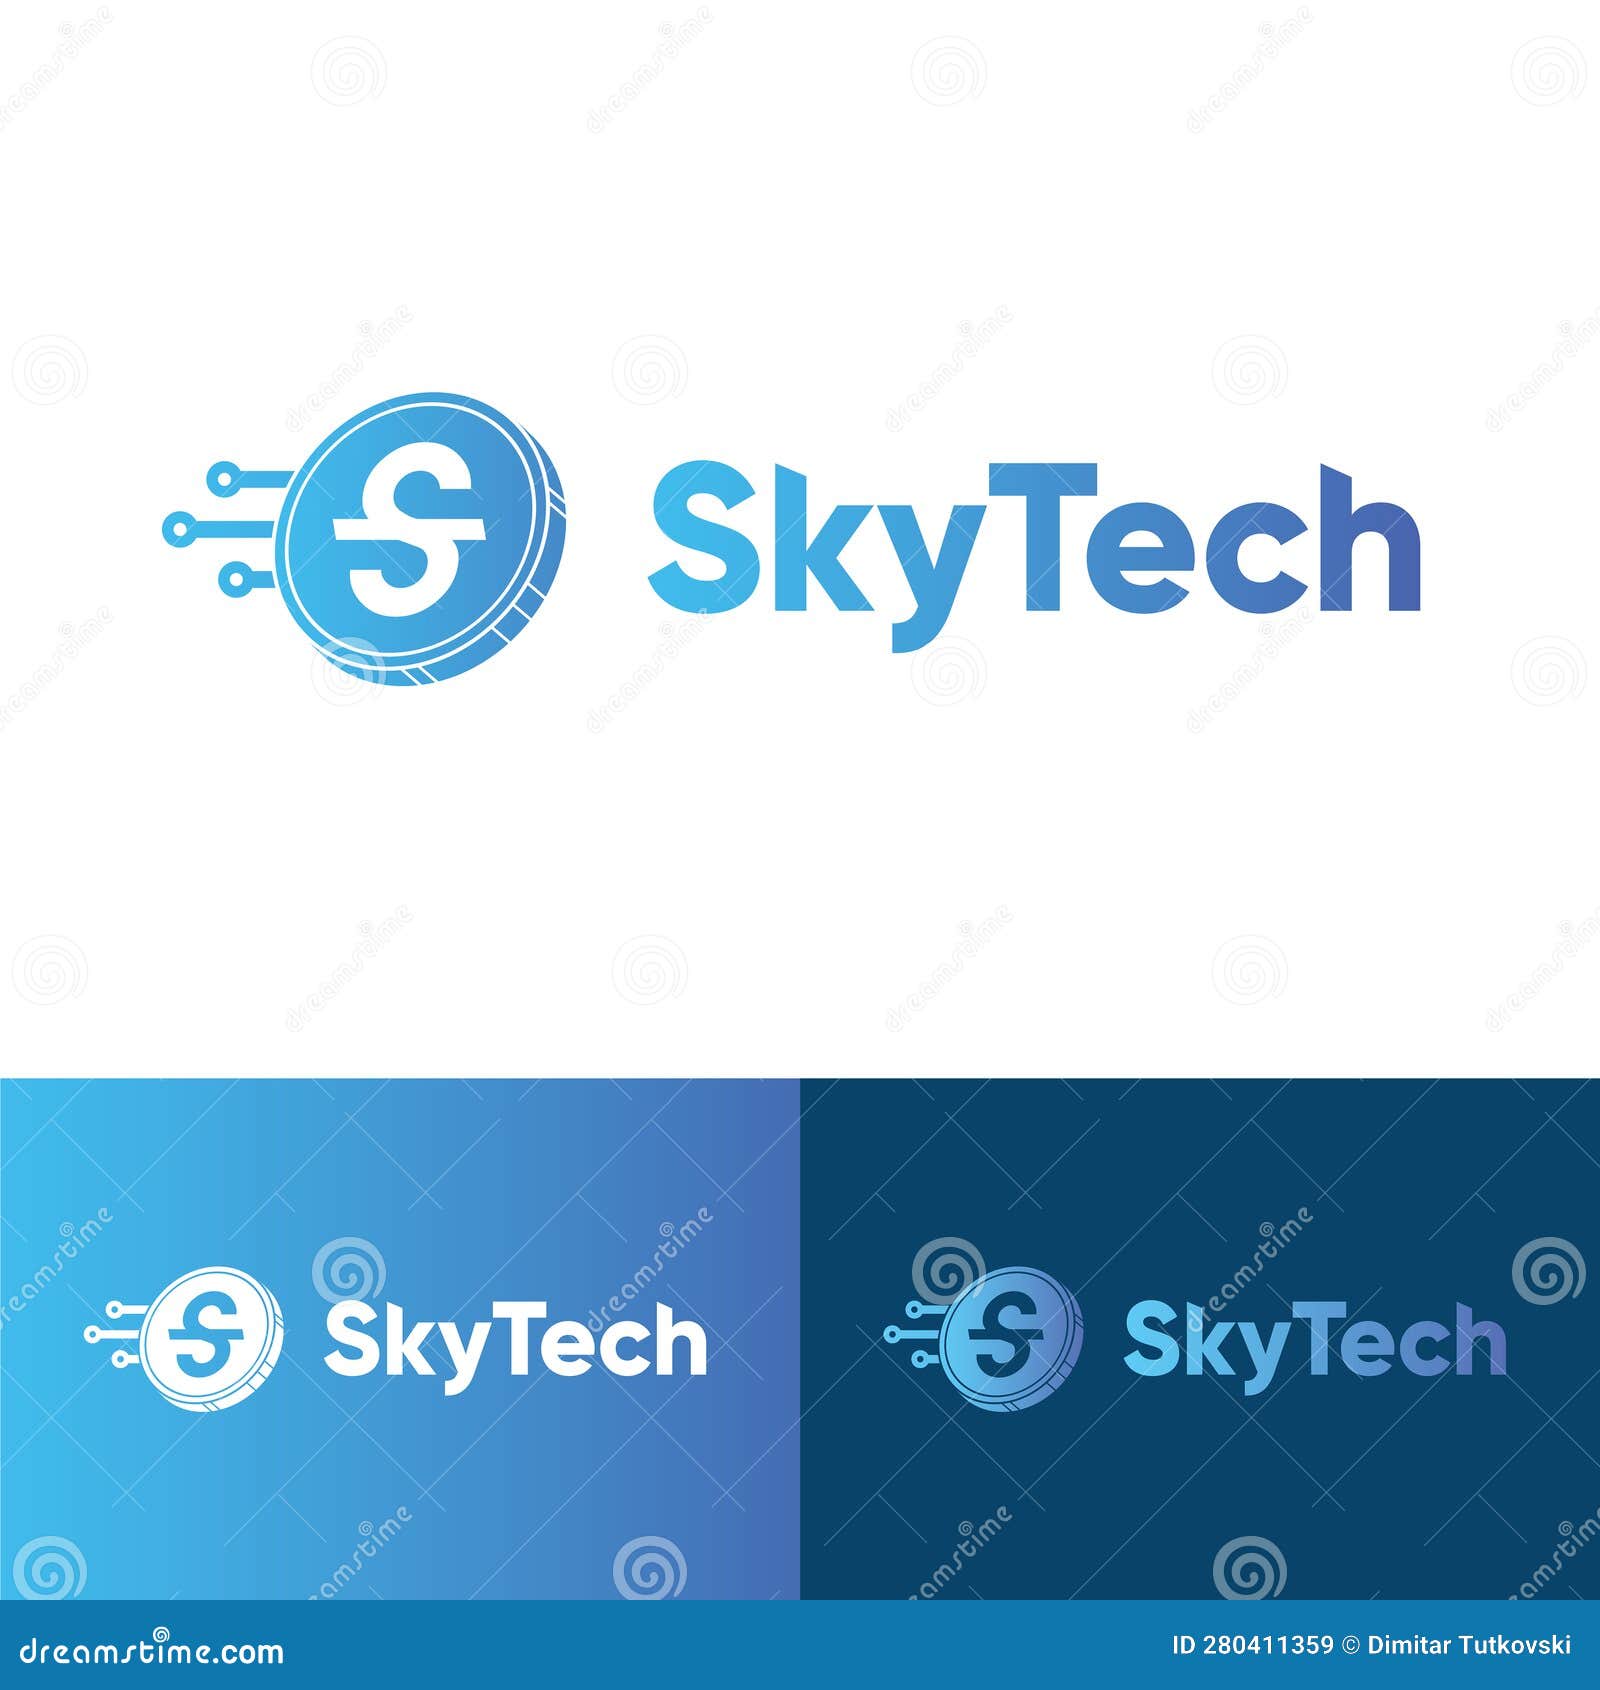 sky tech - crypto